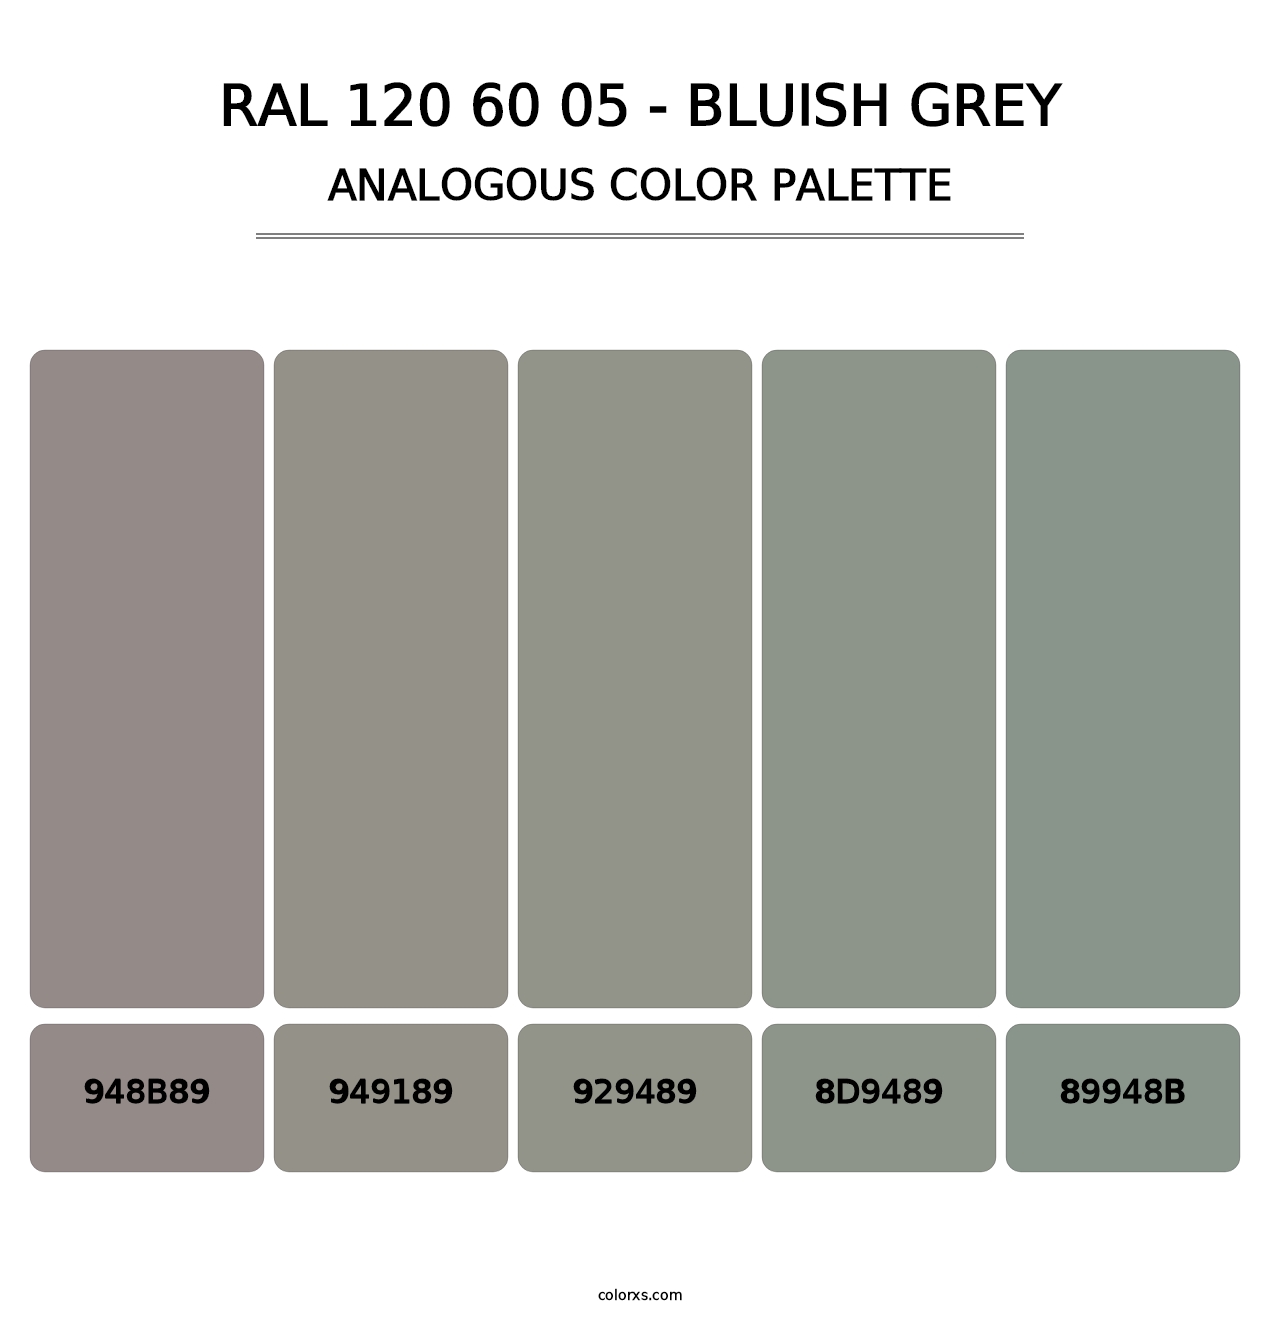 RAL 120 60 05 - Bluish Grey - Analogous Color Palette